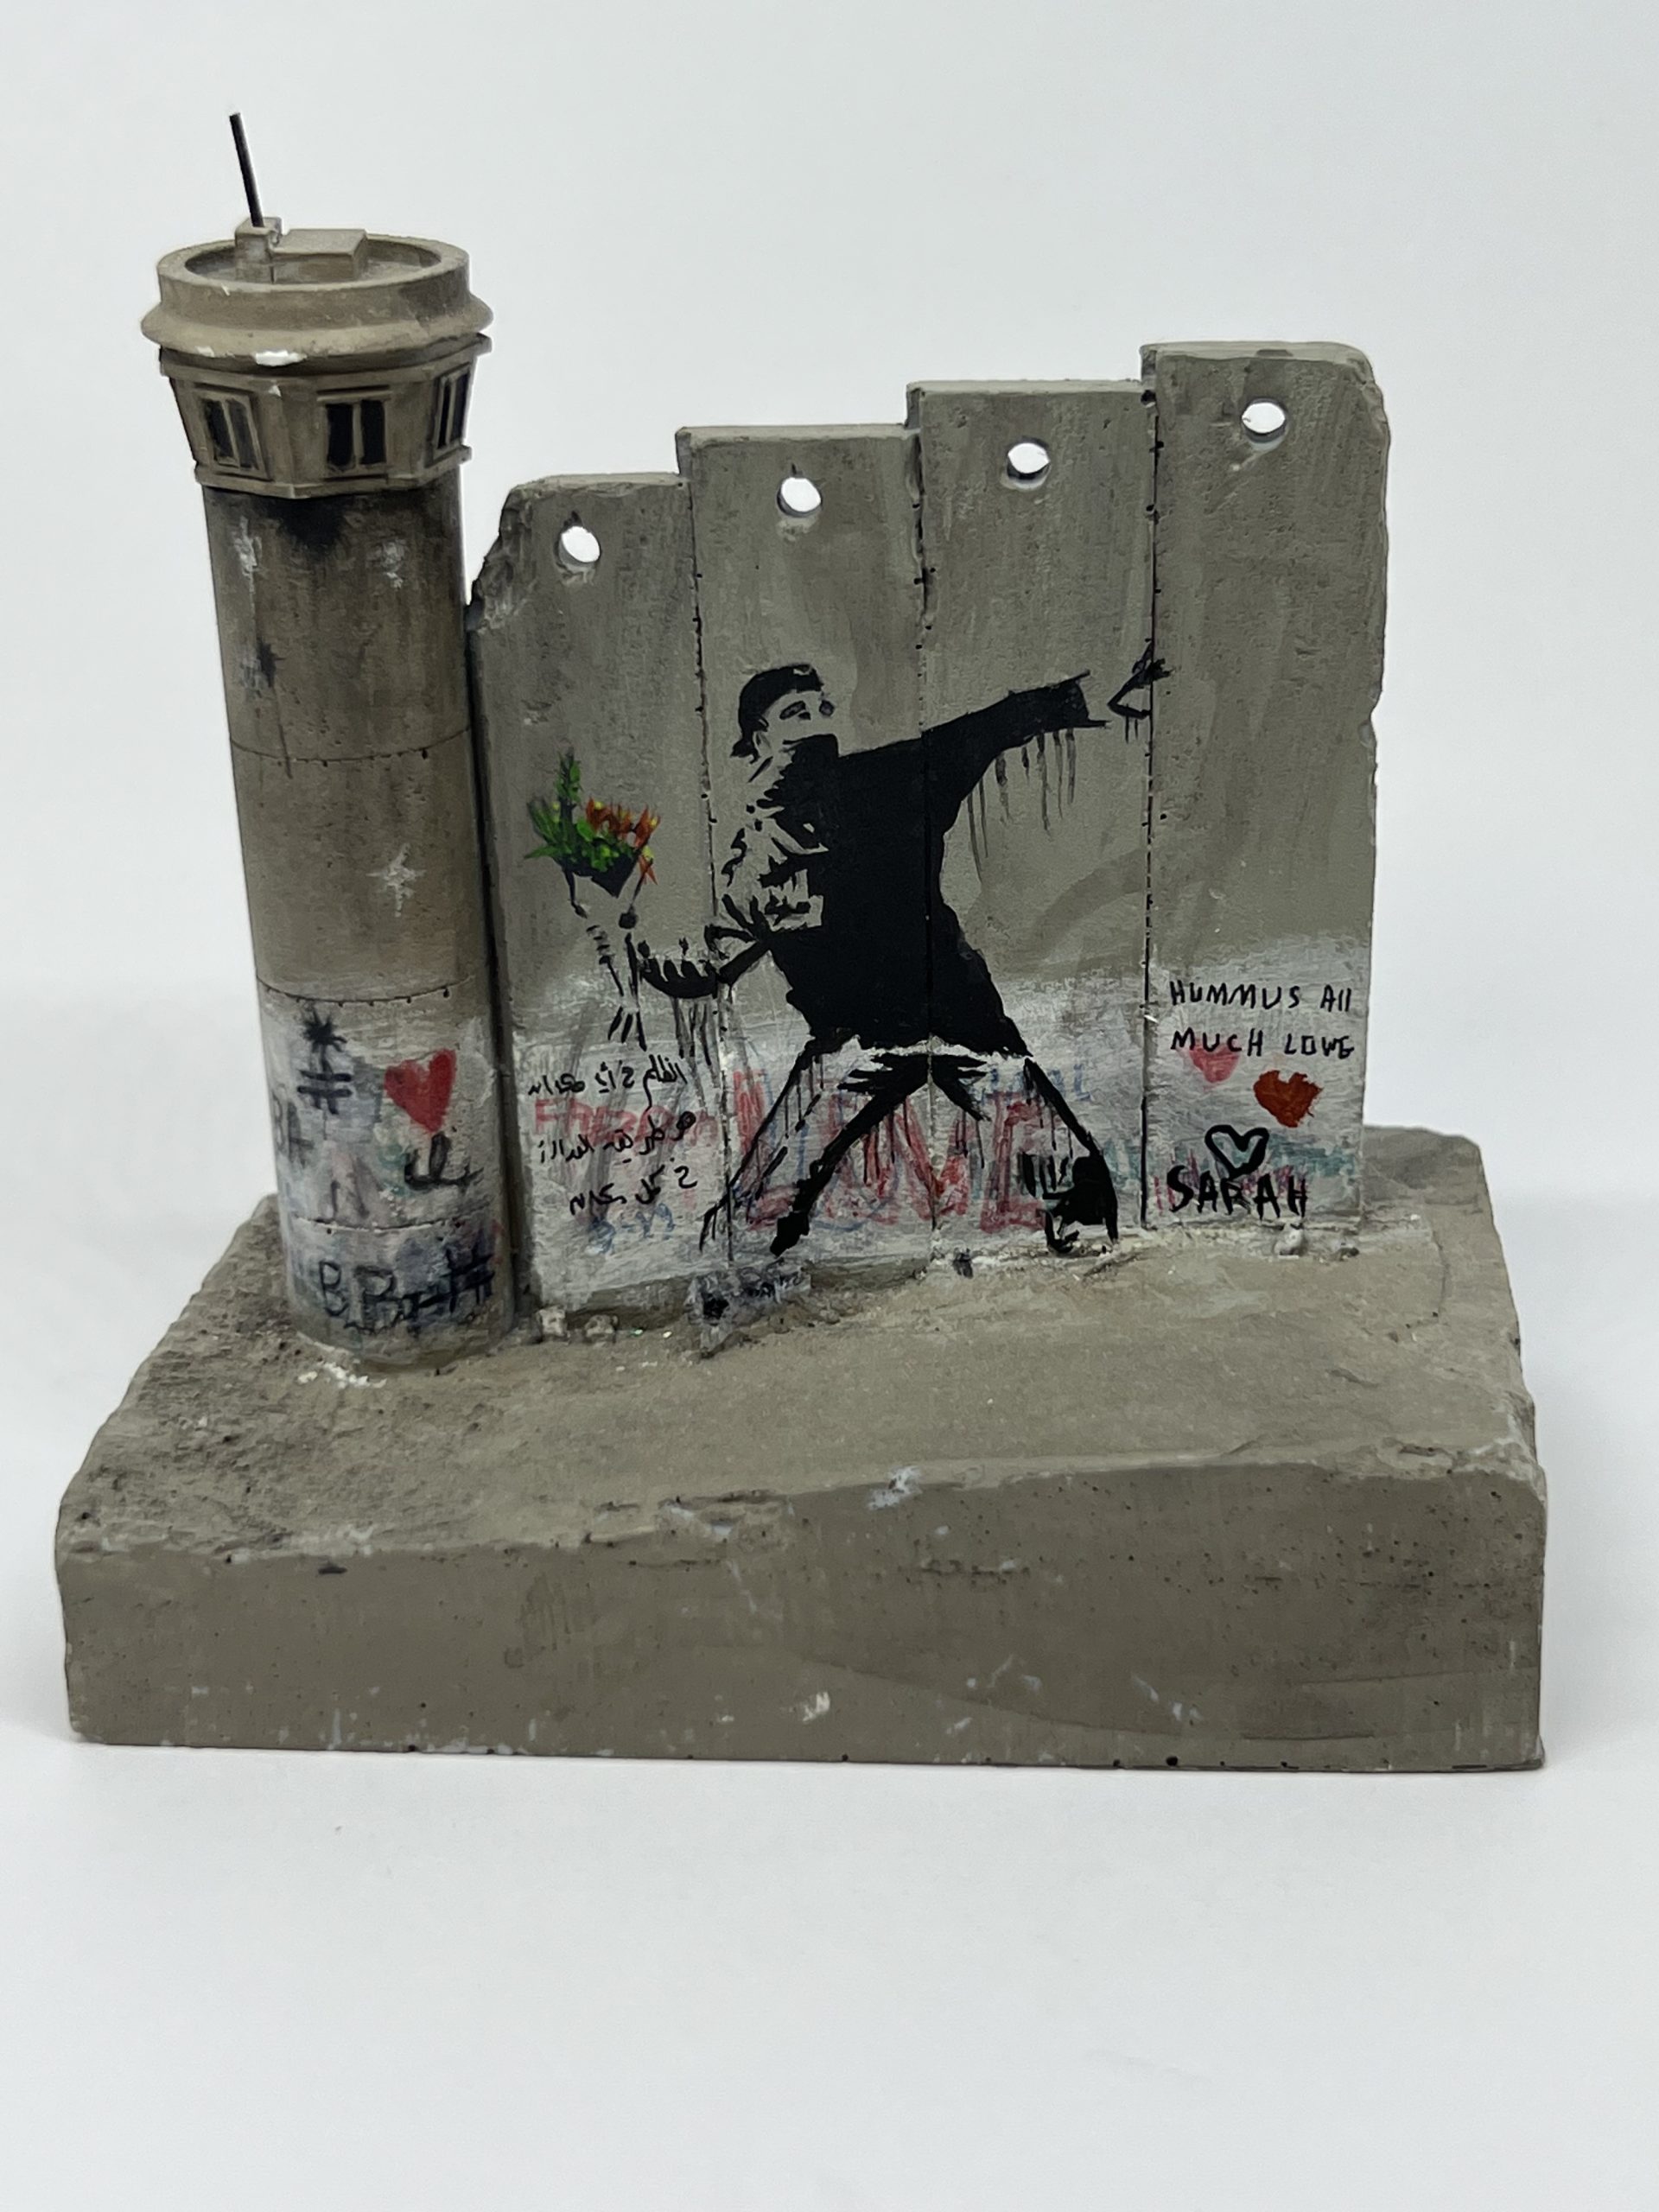 Banksy Flower thrower tower sculpture